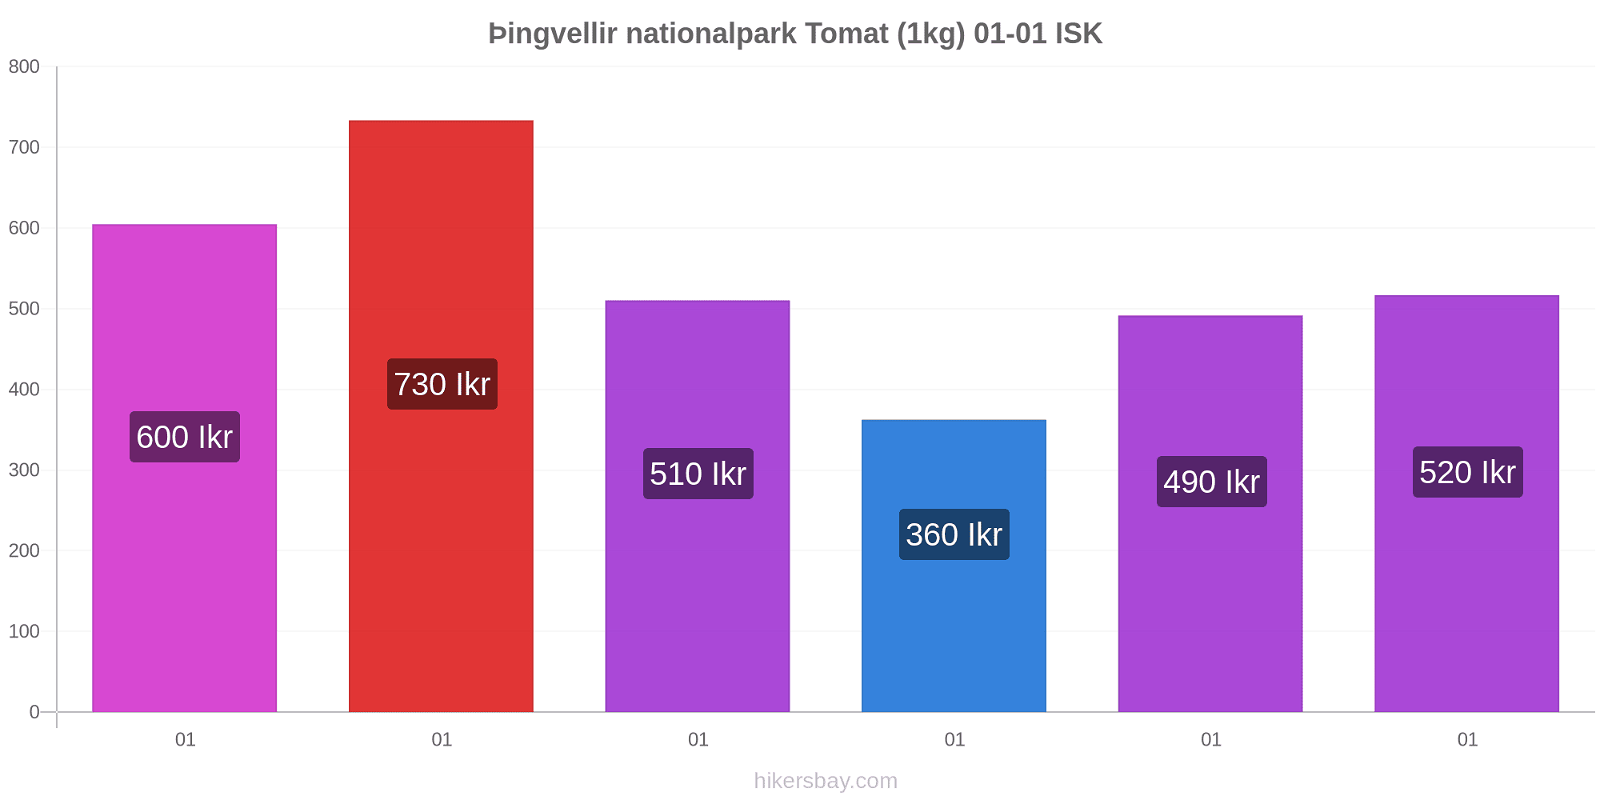 Þingvellir nationalpark prisförändringar Tomat (1kg) hikersbay.com